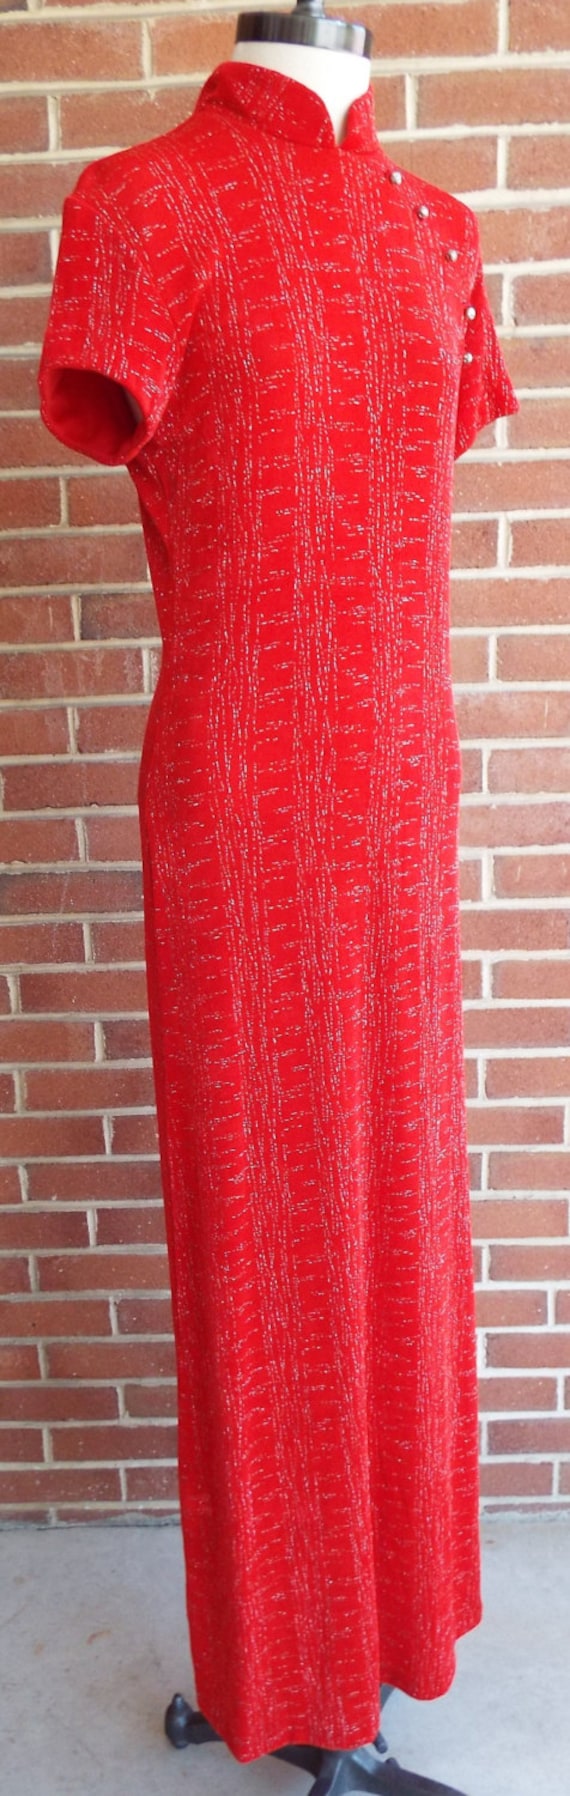 Vintage Sparkley Short Sleeve Dress by Rhapsody LT